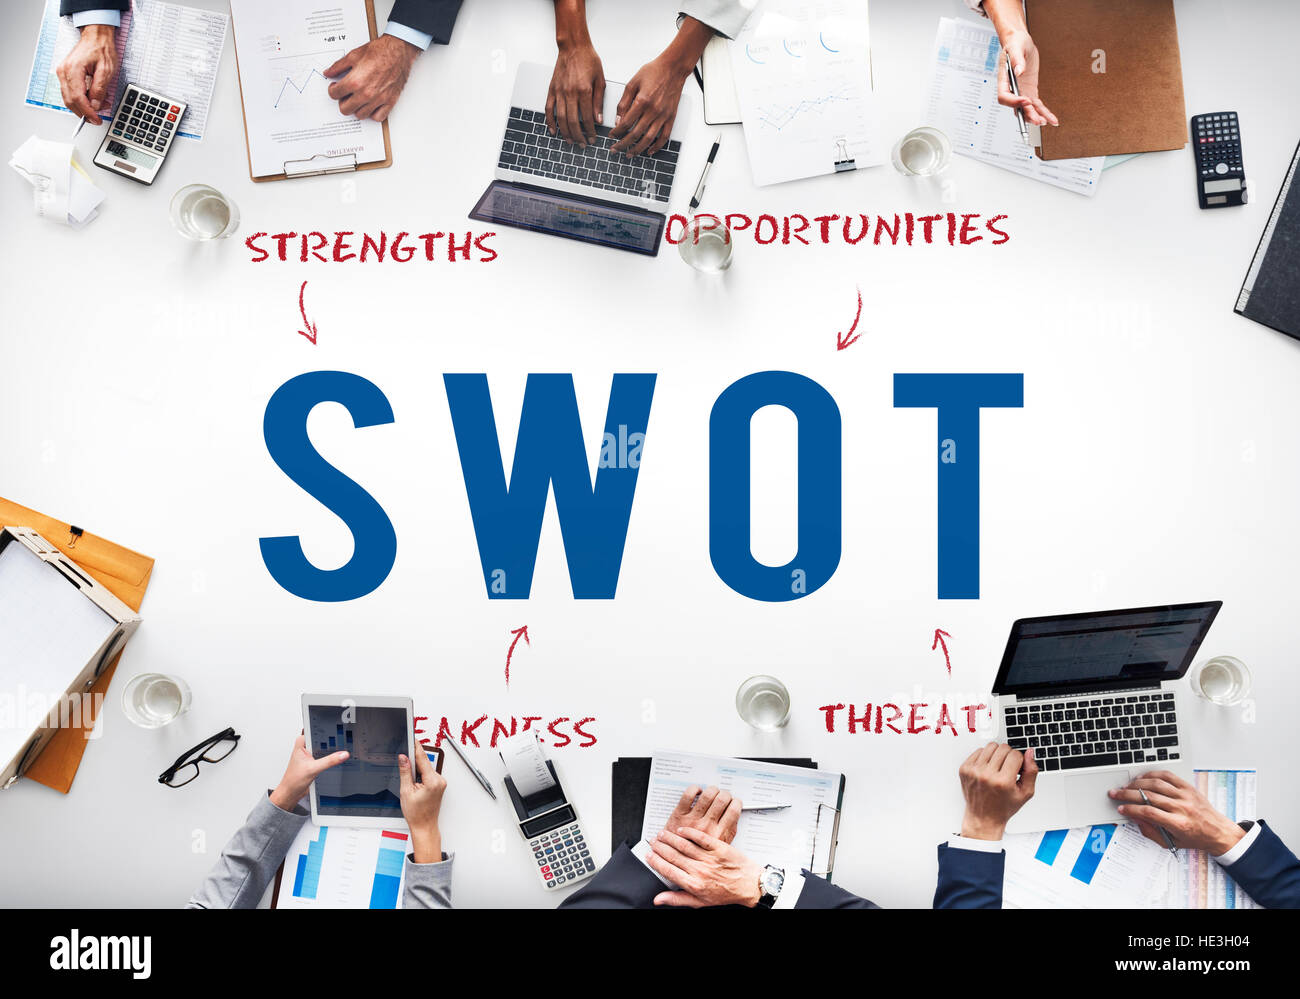 SWOT Business Company Strategy Marketing Concept Stock Photo